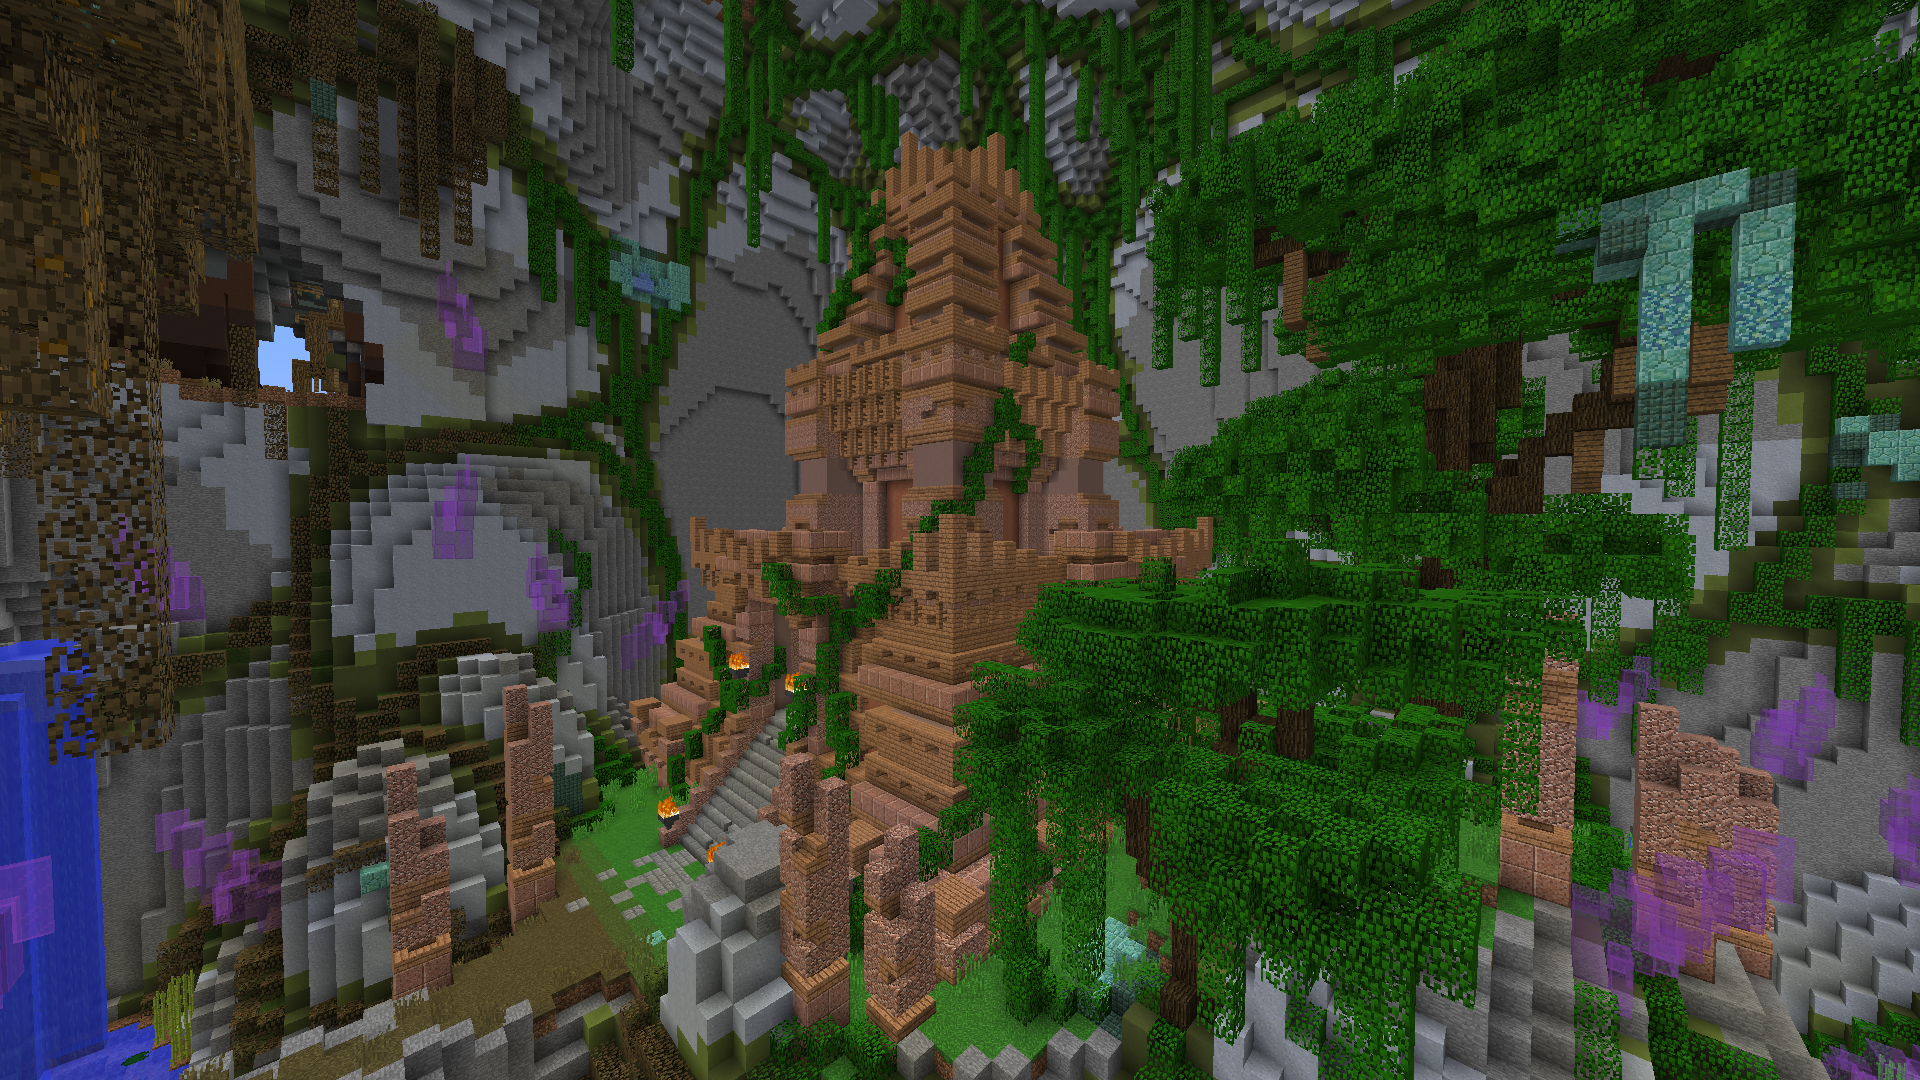 minecraft jungle temple house